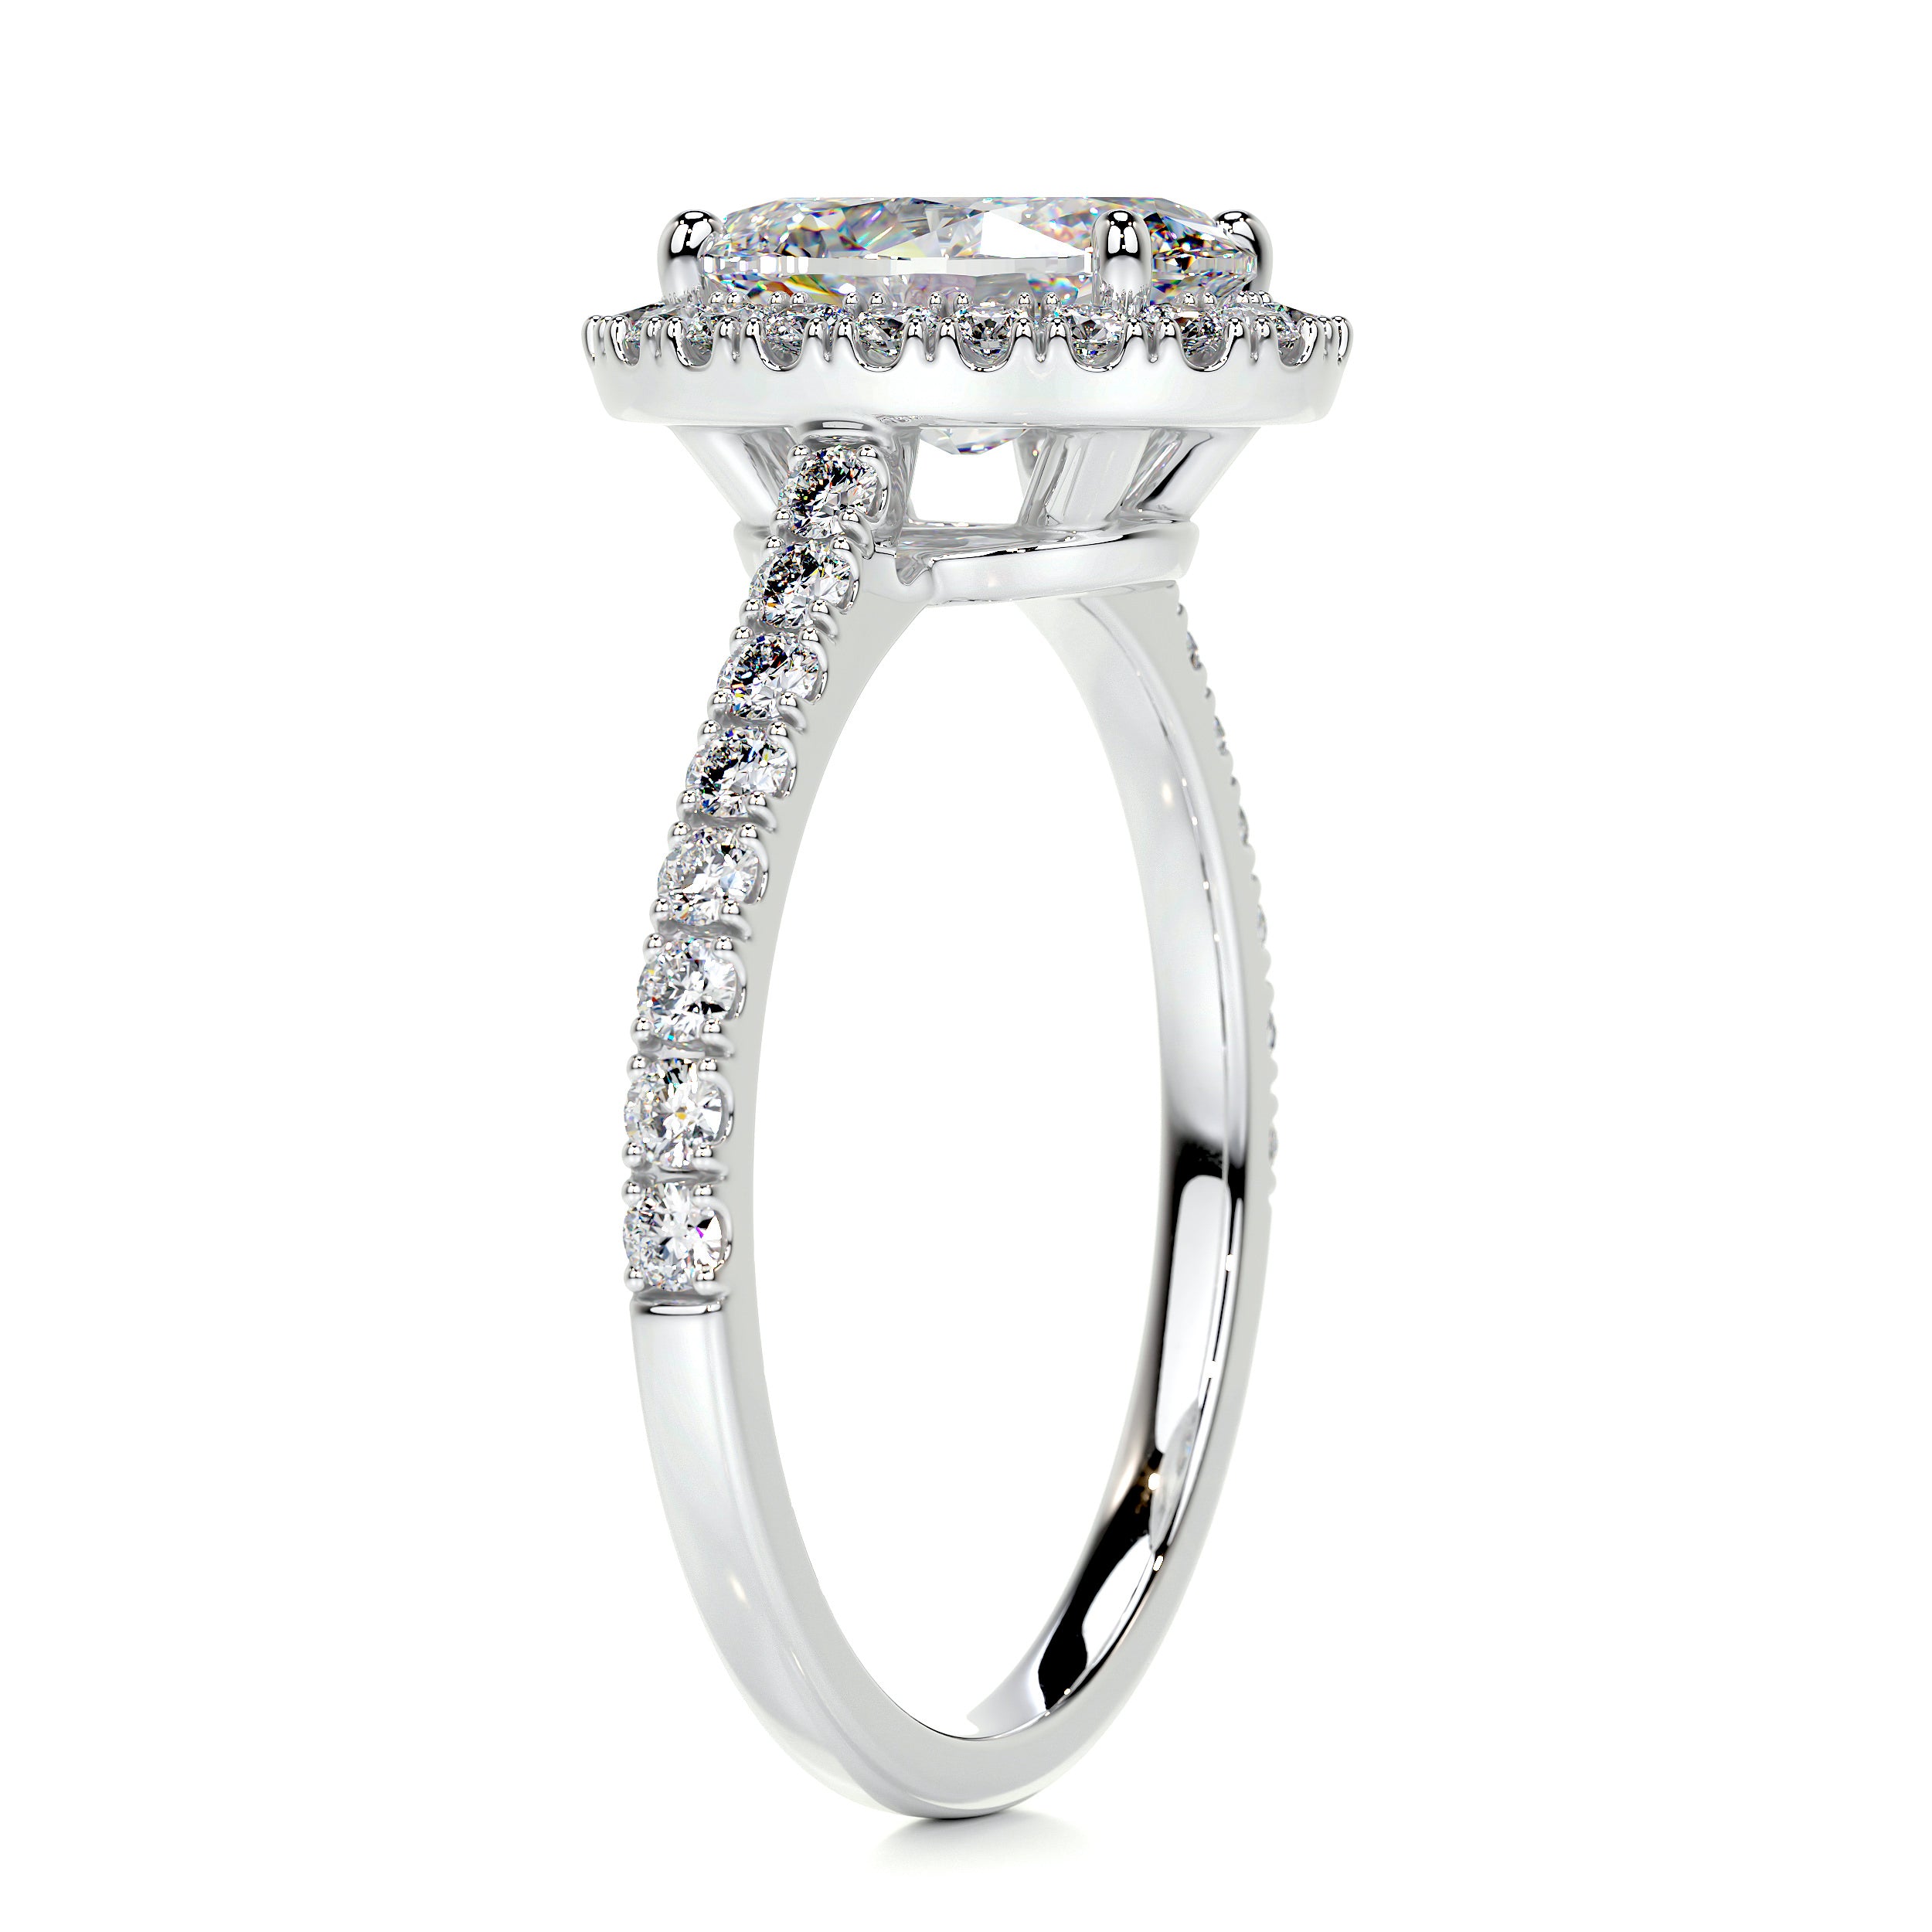 Maria Moissanite & Diamonds Ring -14K White Gold